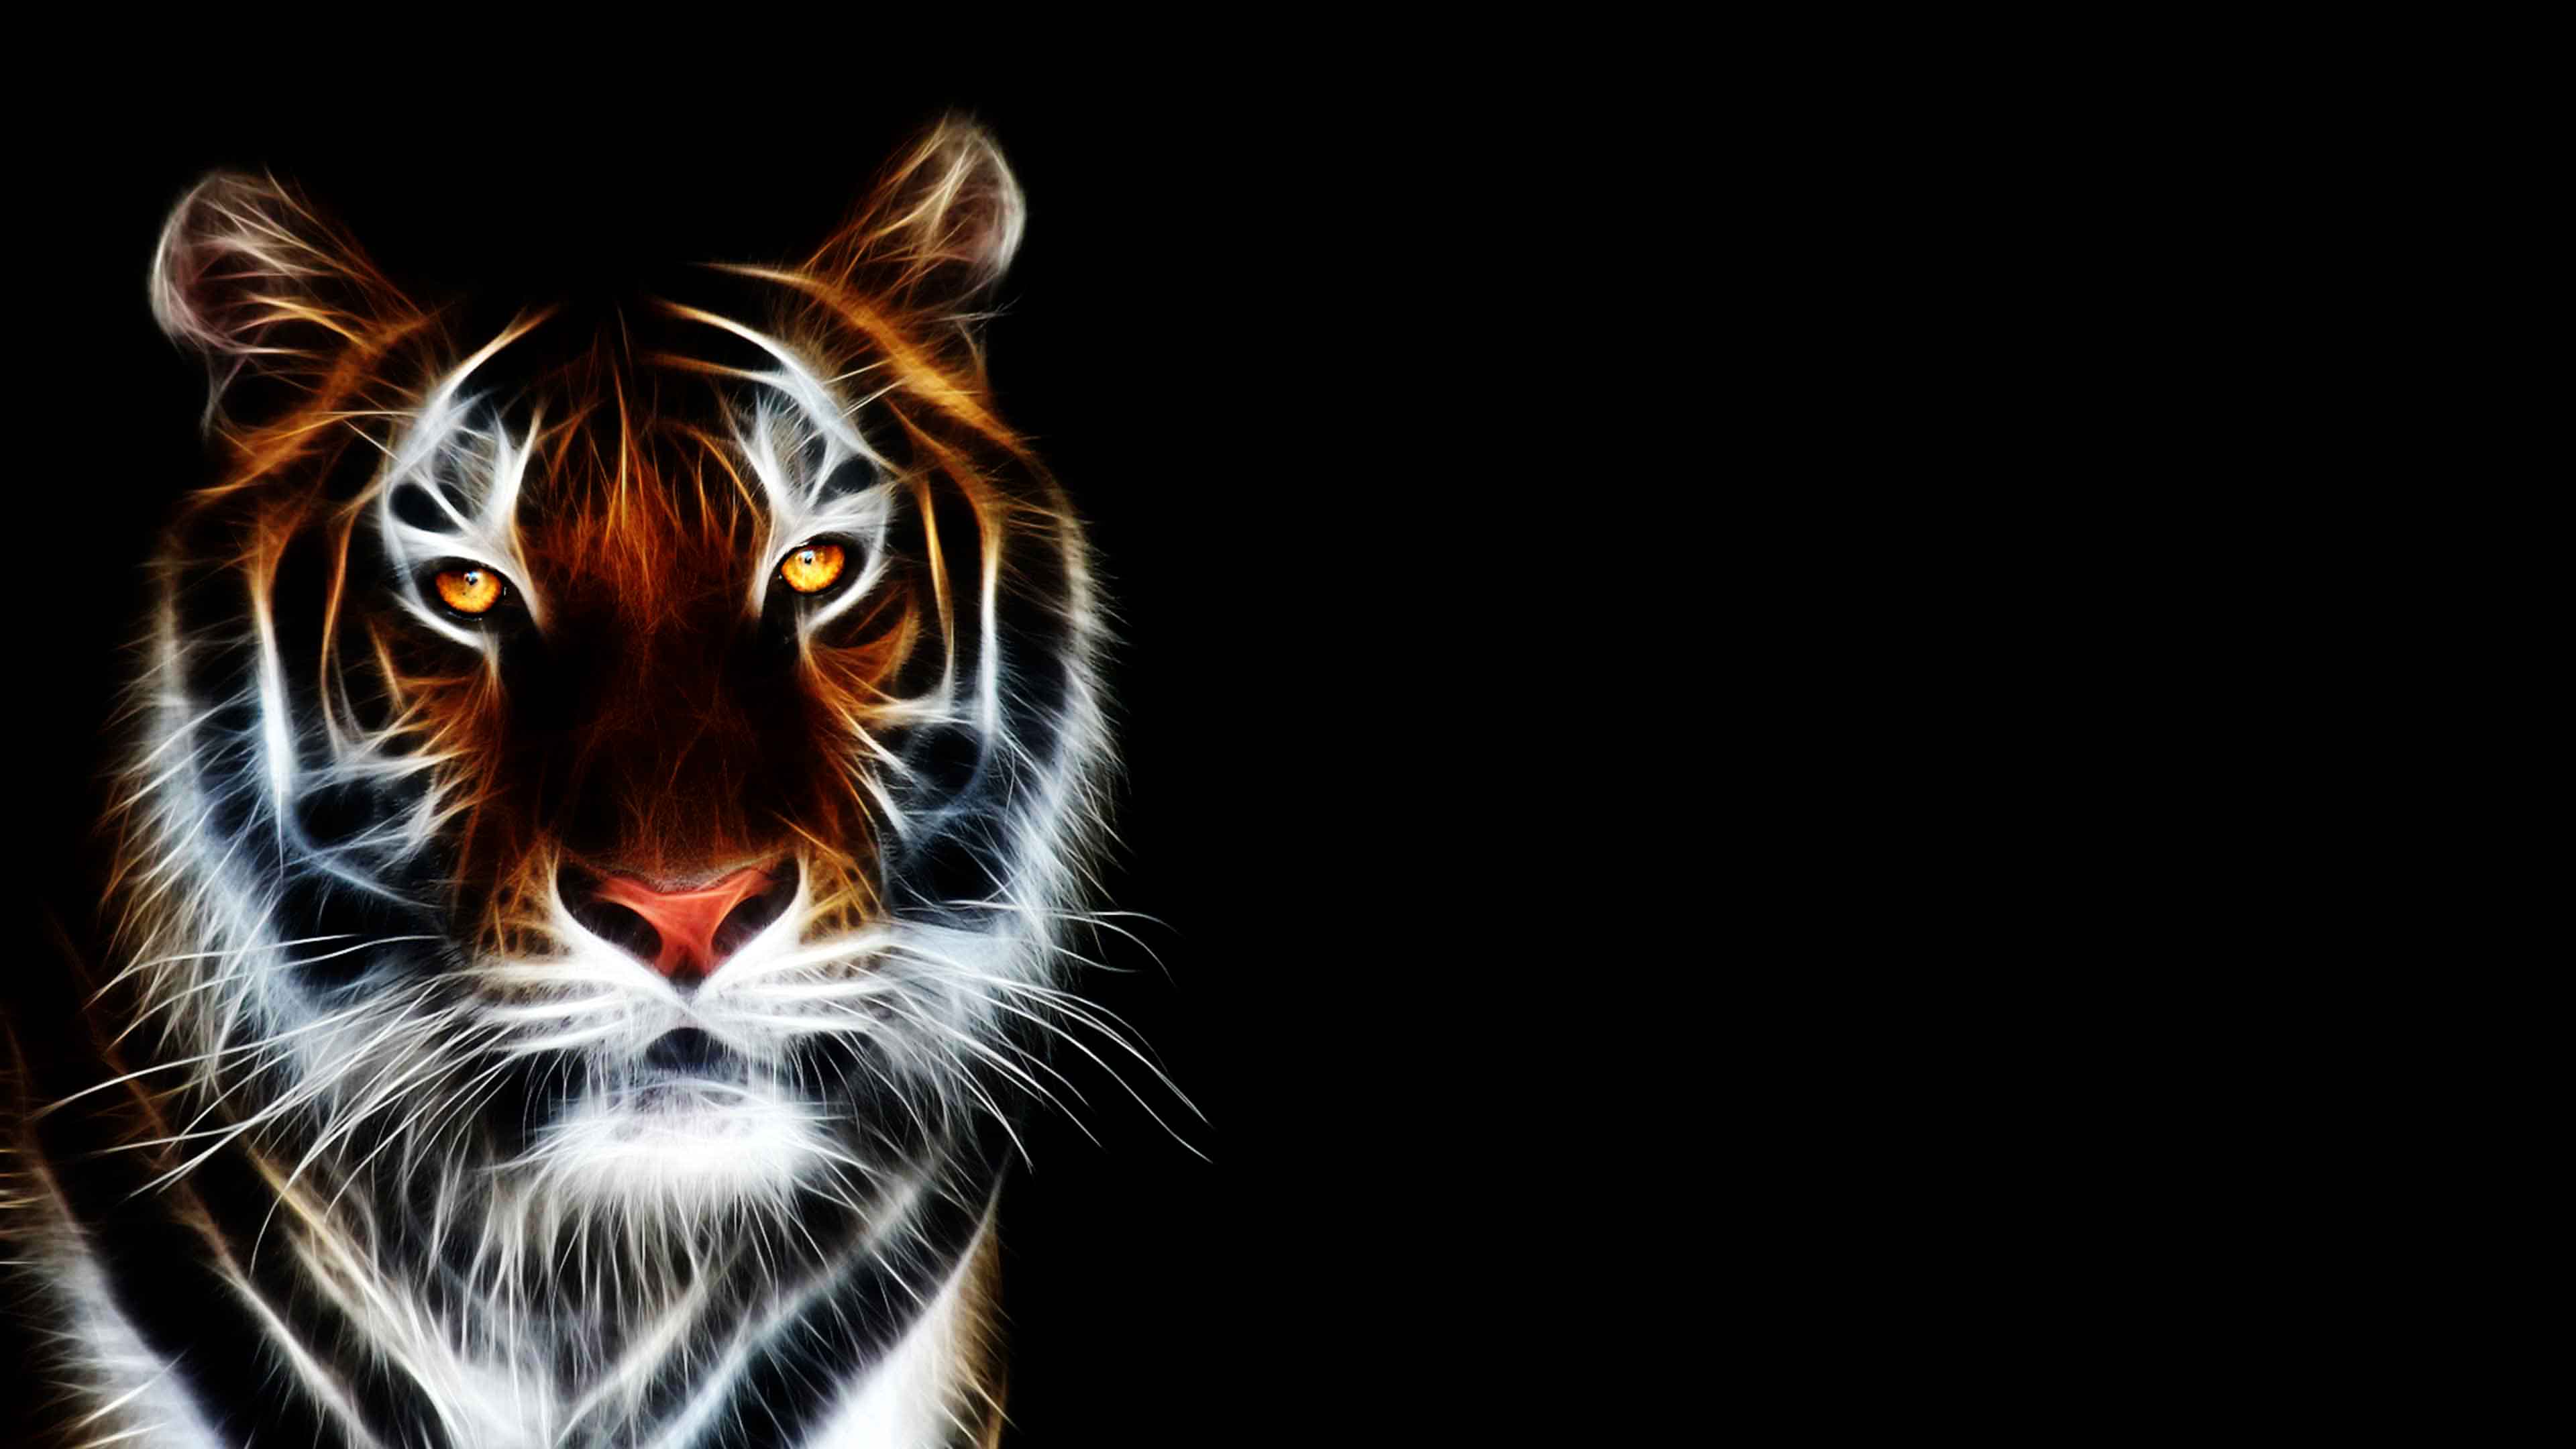 3D Animated Tiger Wallpaper Live Wallpaper HD